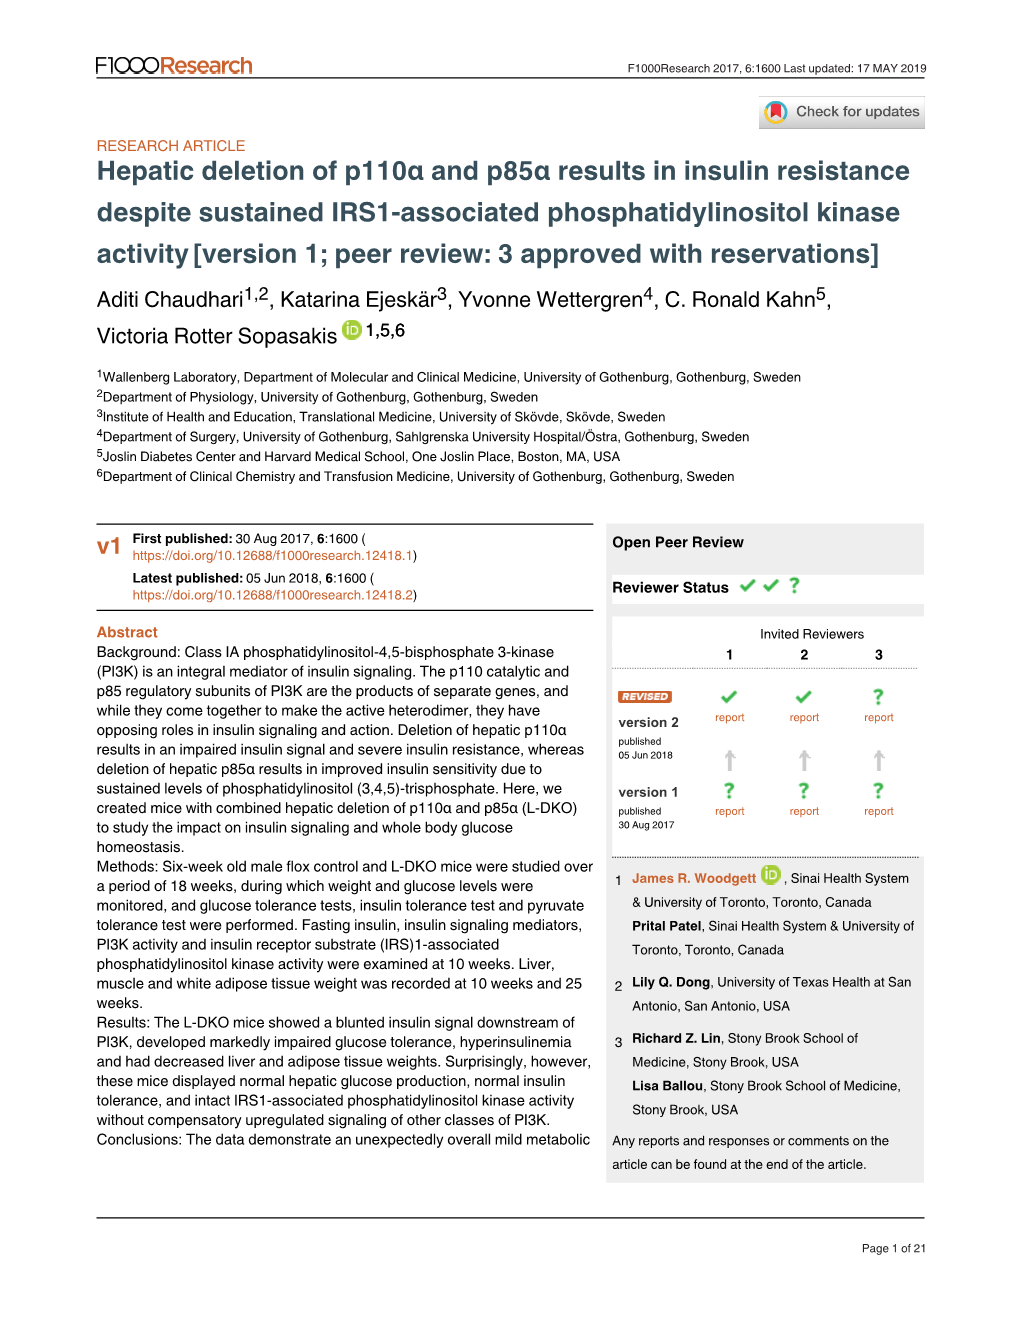 Hepatic Deletion of P110α and P85α Results in Insulin Resistance Despite